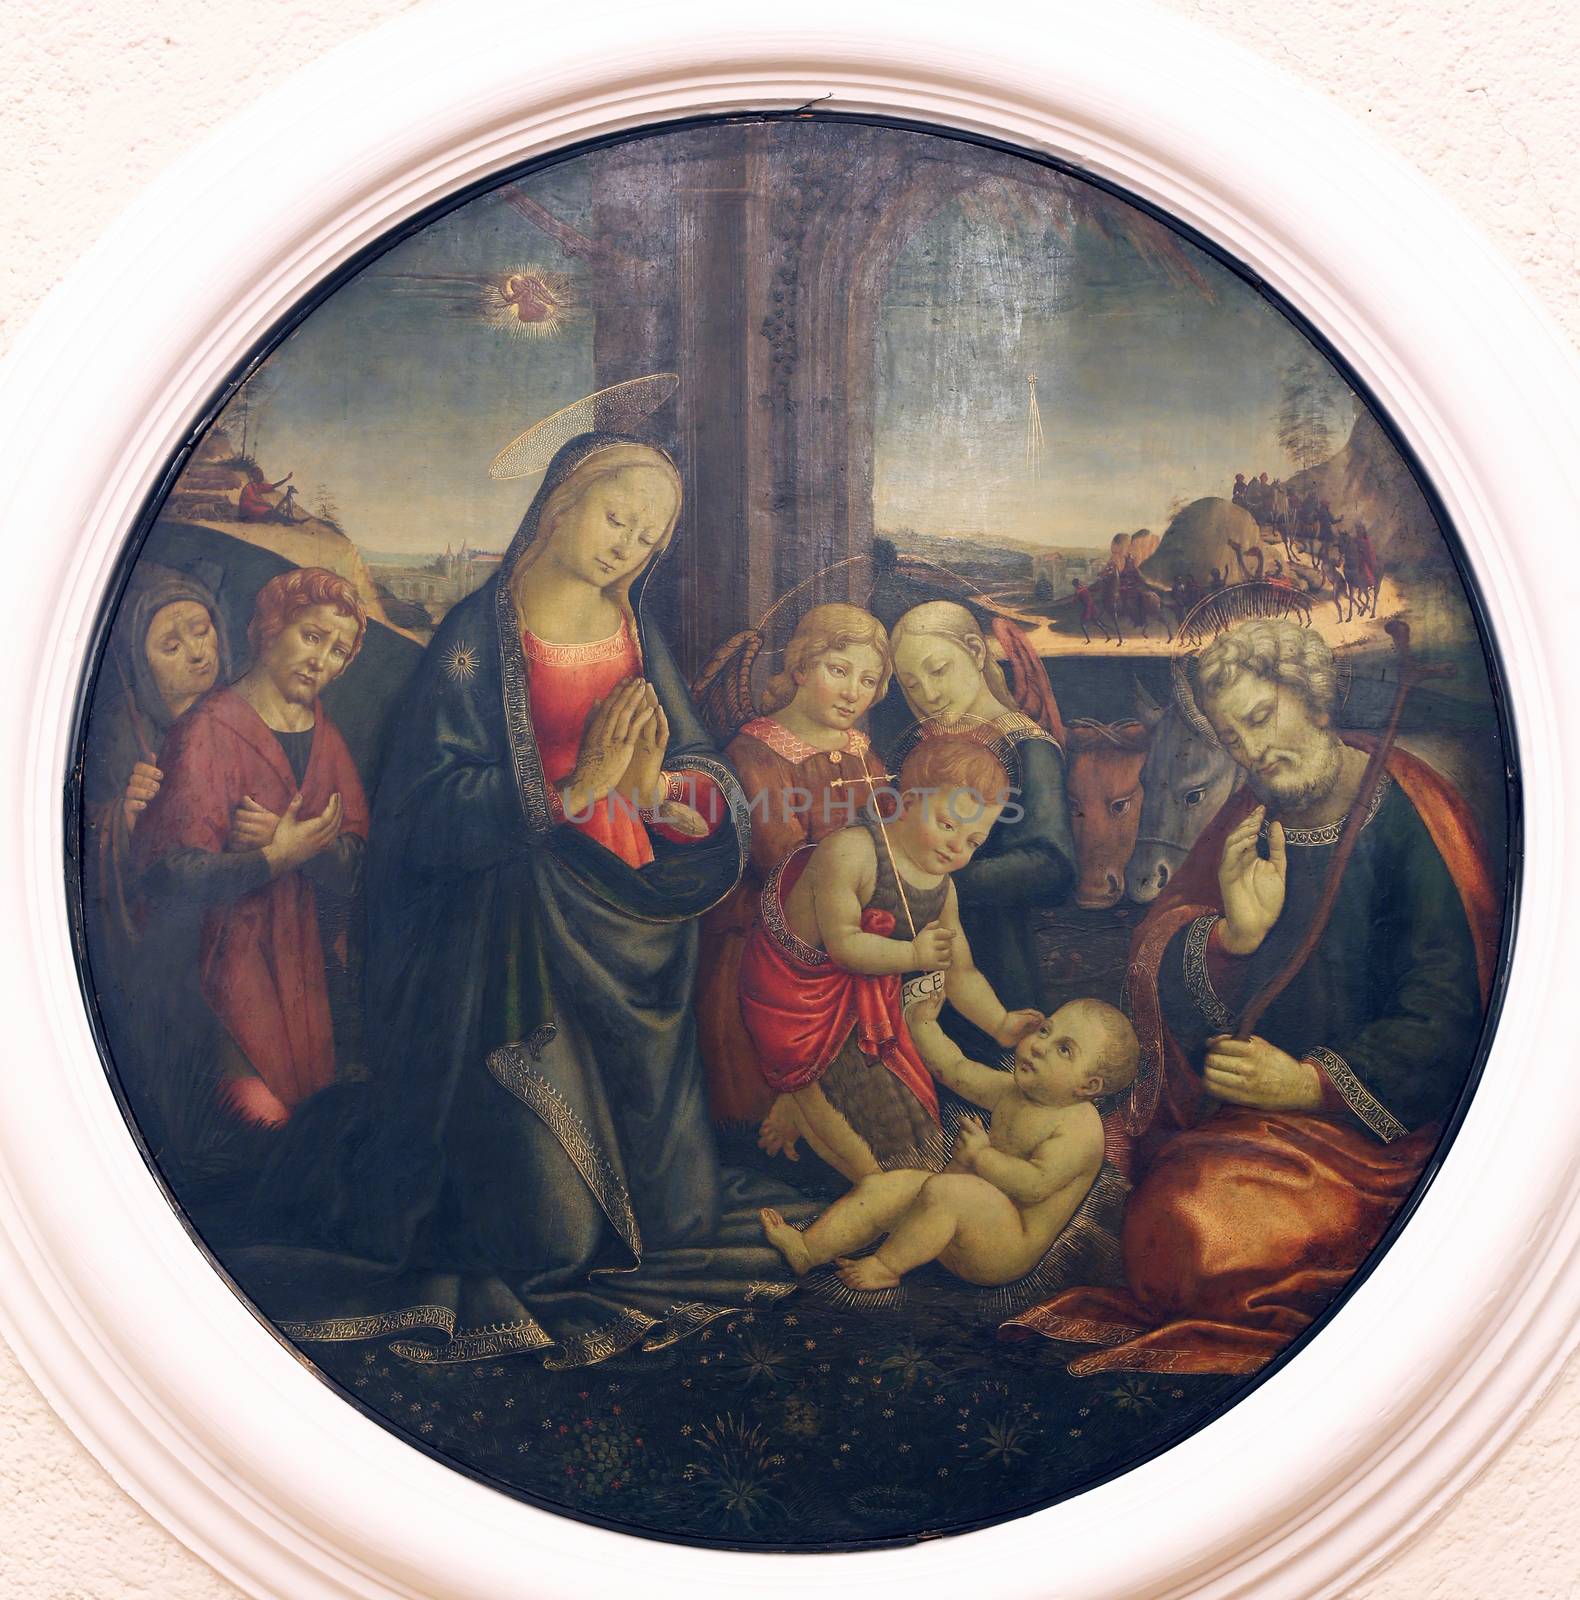 Jacopo del Sellaio: The Birth of Jesus, Old Masters Collection, Croatian Academy of Sciences in Zagreb, Croatia